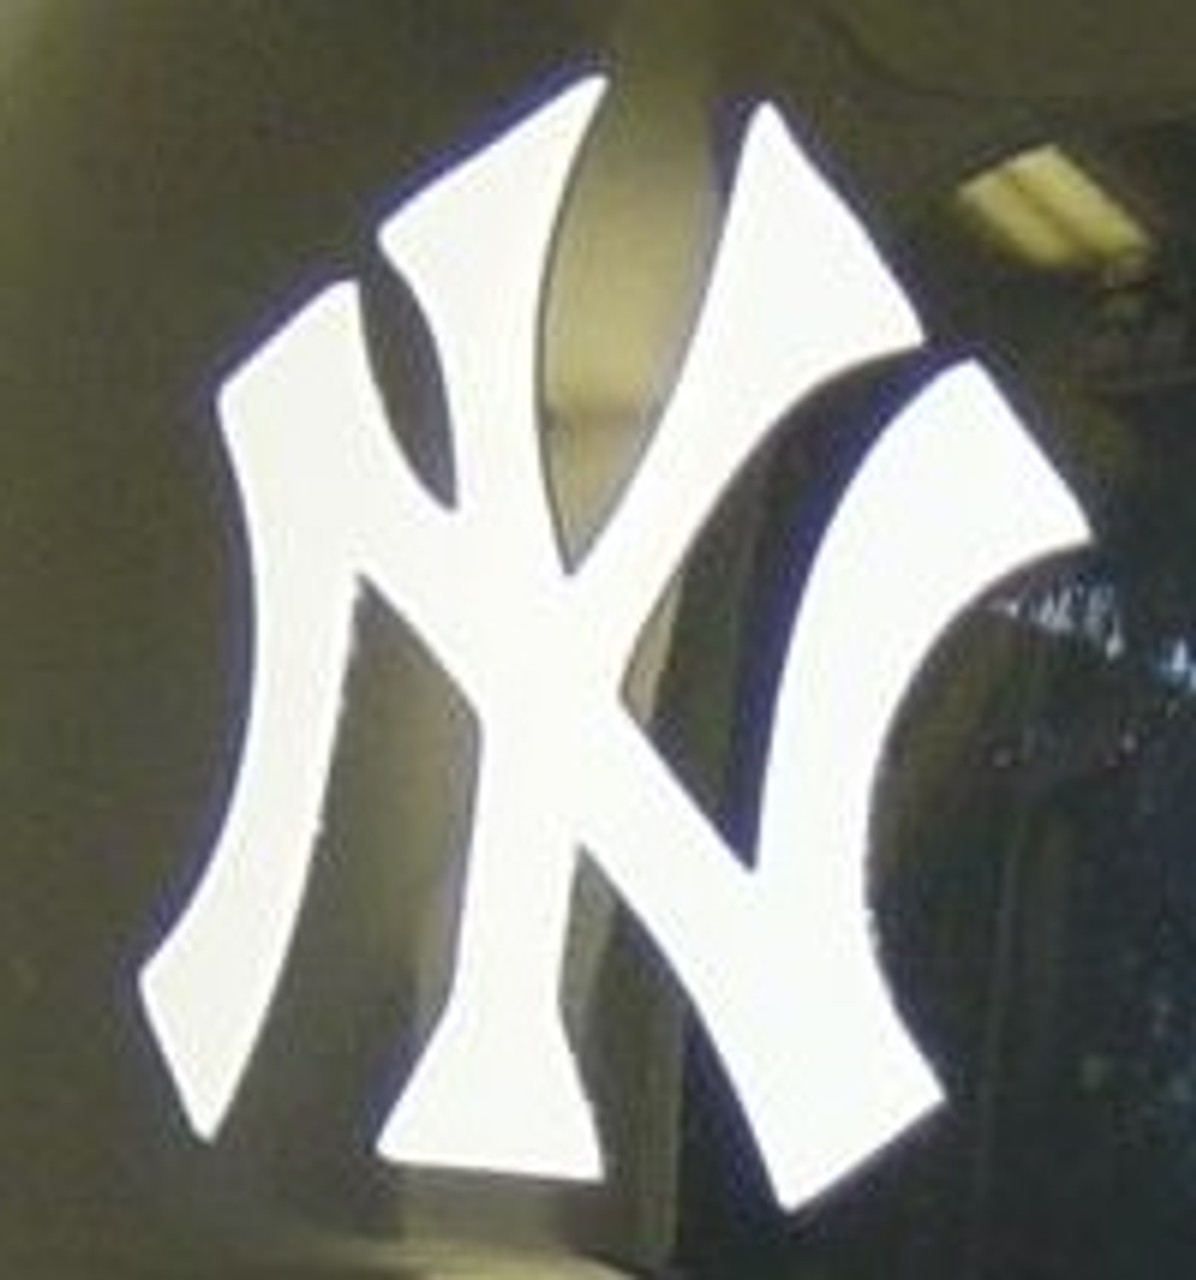 New York Yankees 10-Inch Team Logo Glove